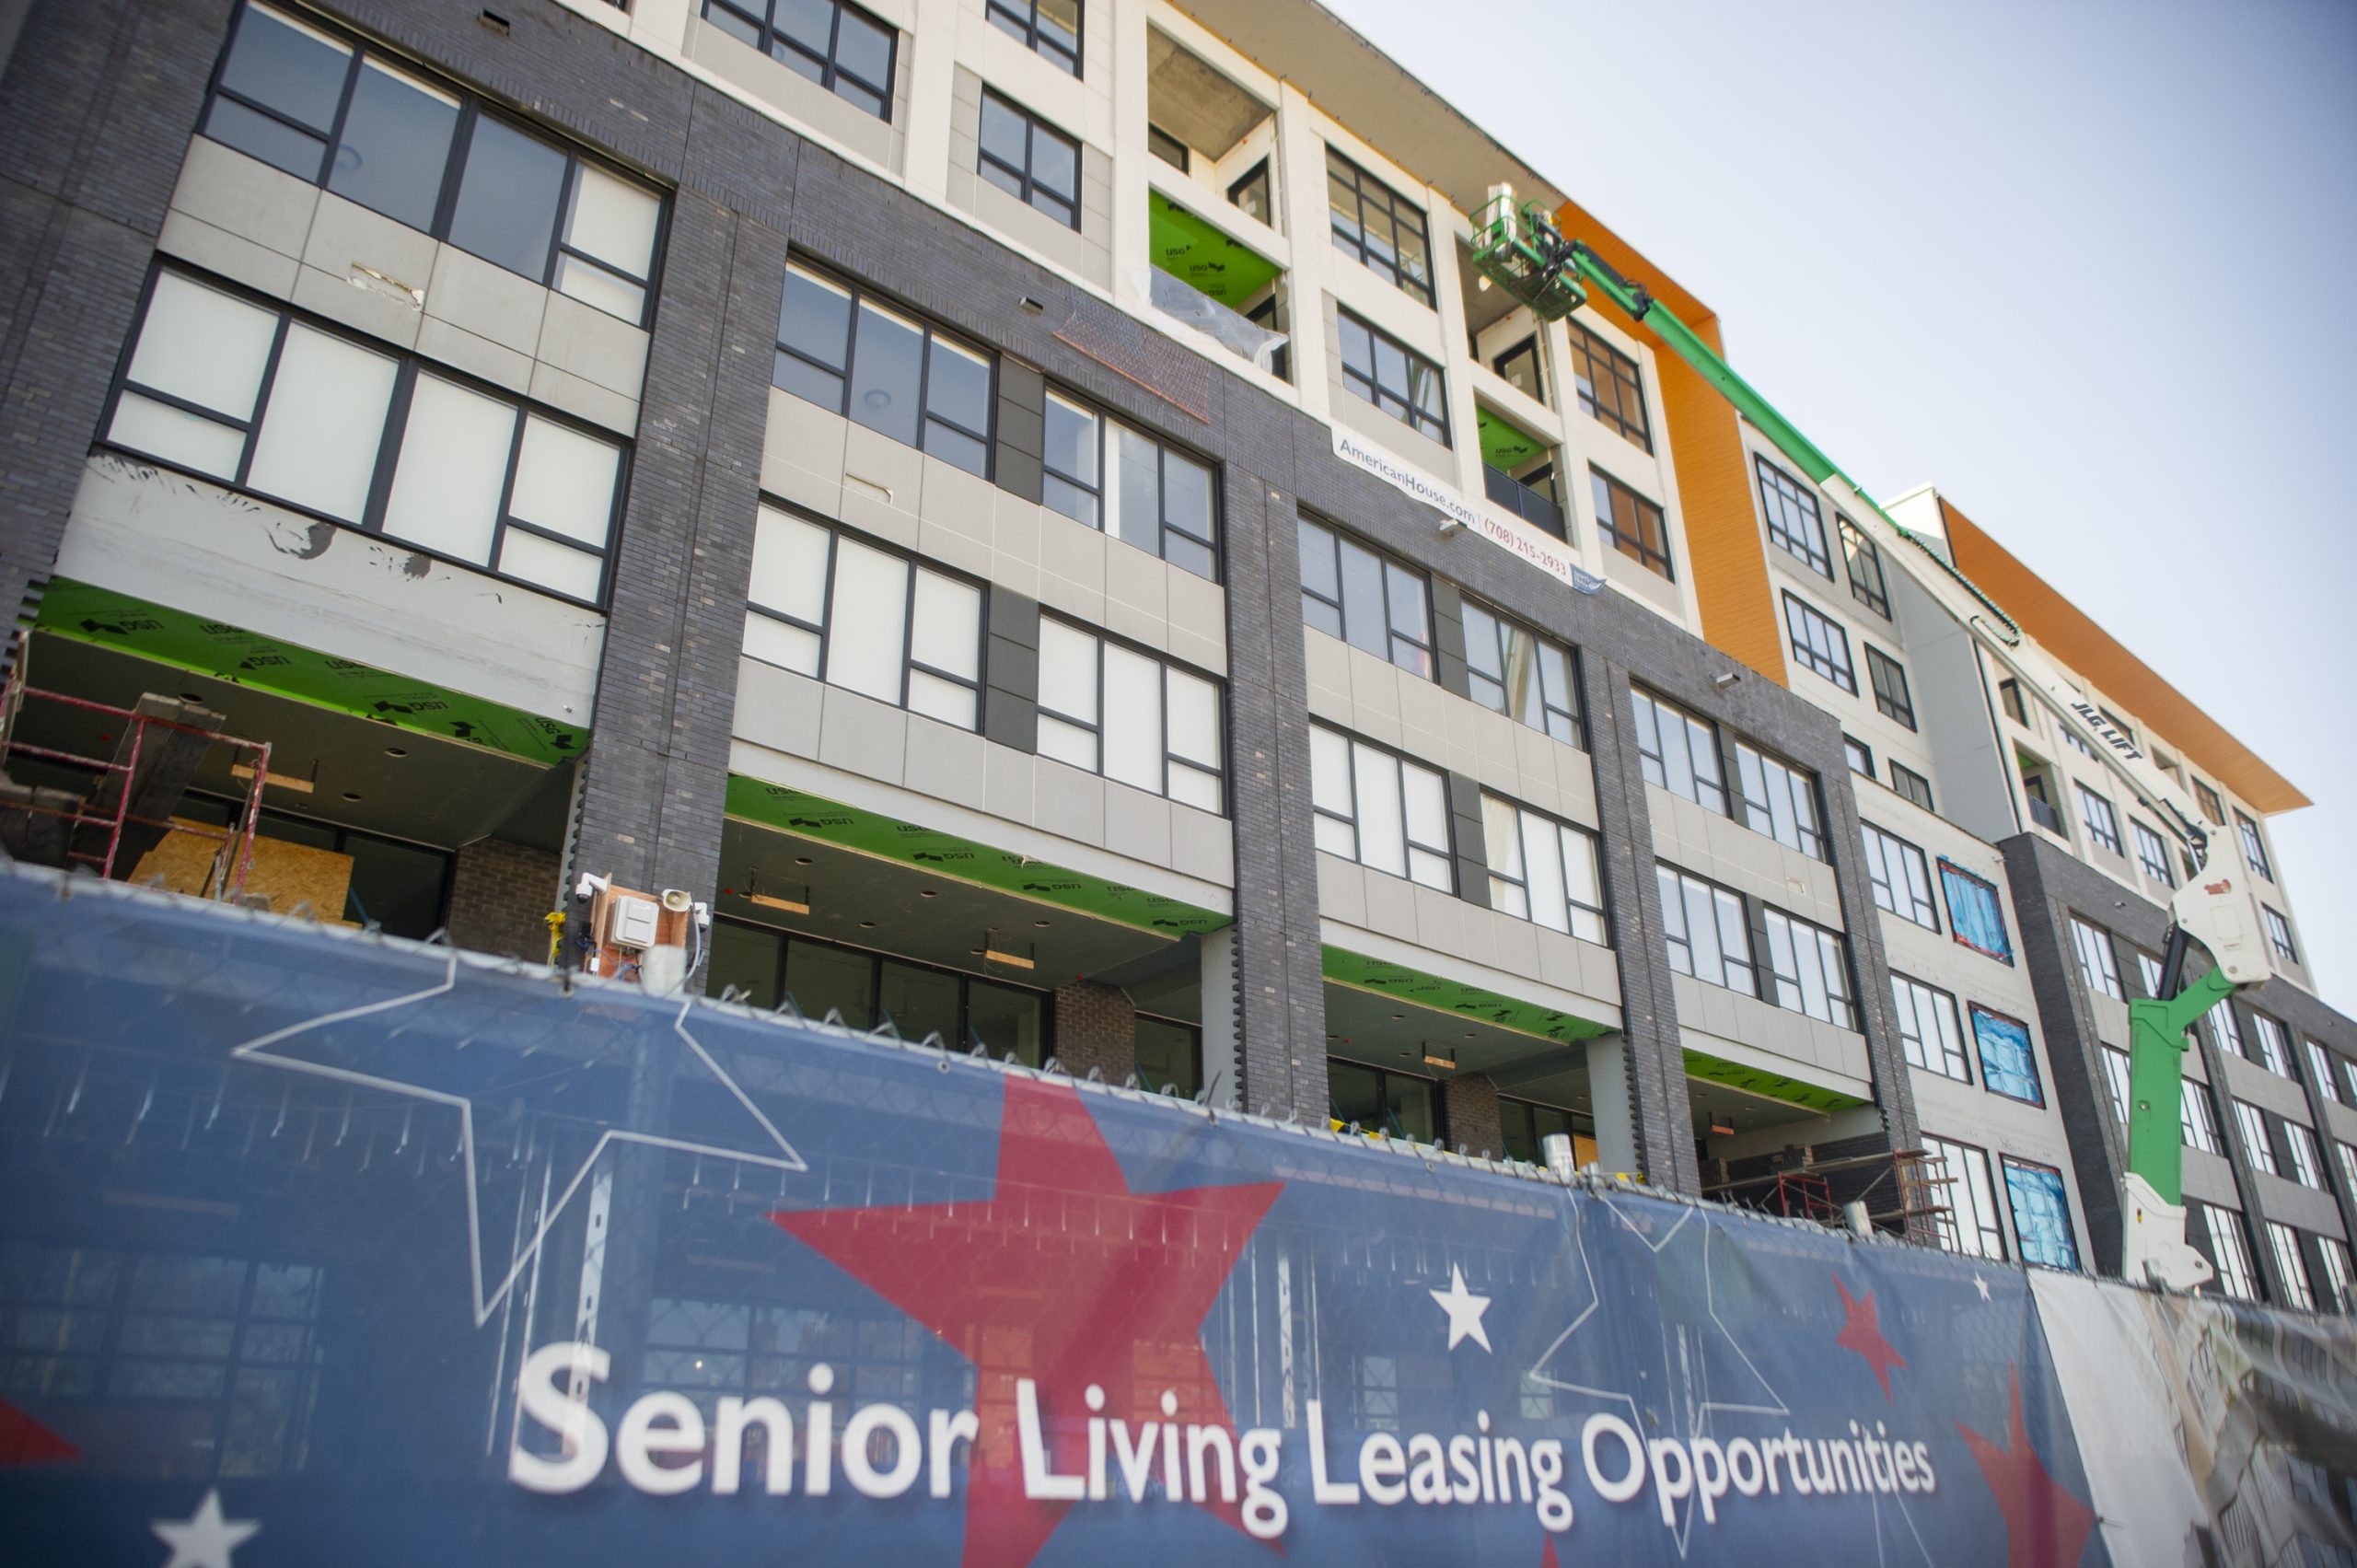 New senior living development set to open this fall - Oak Park